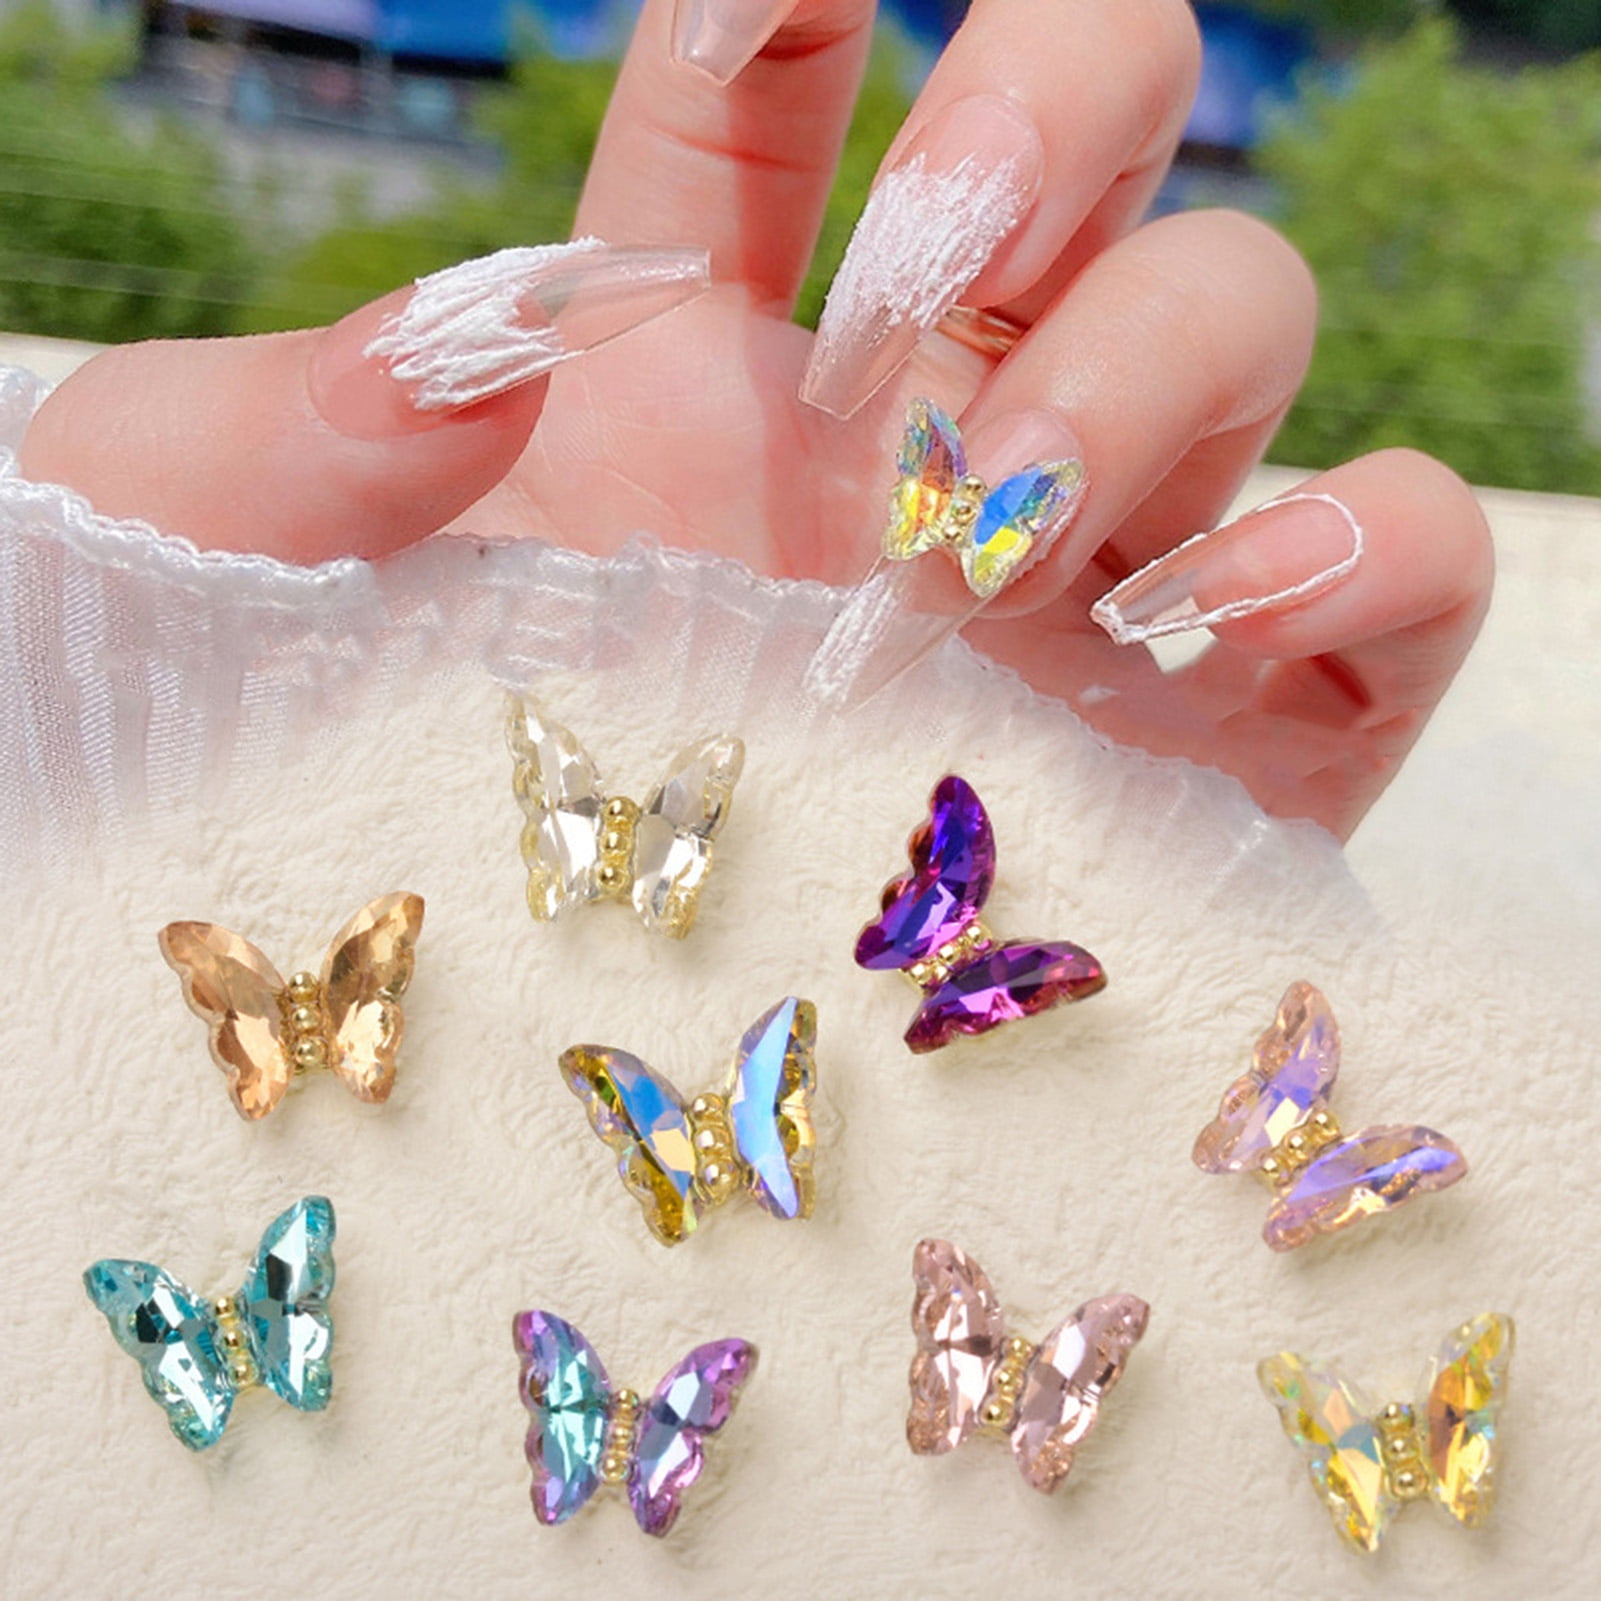  Gold Butterfly Nail Charms 24PCS Metallic Butterflies